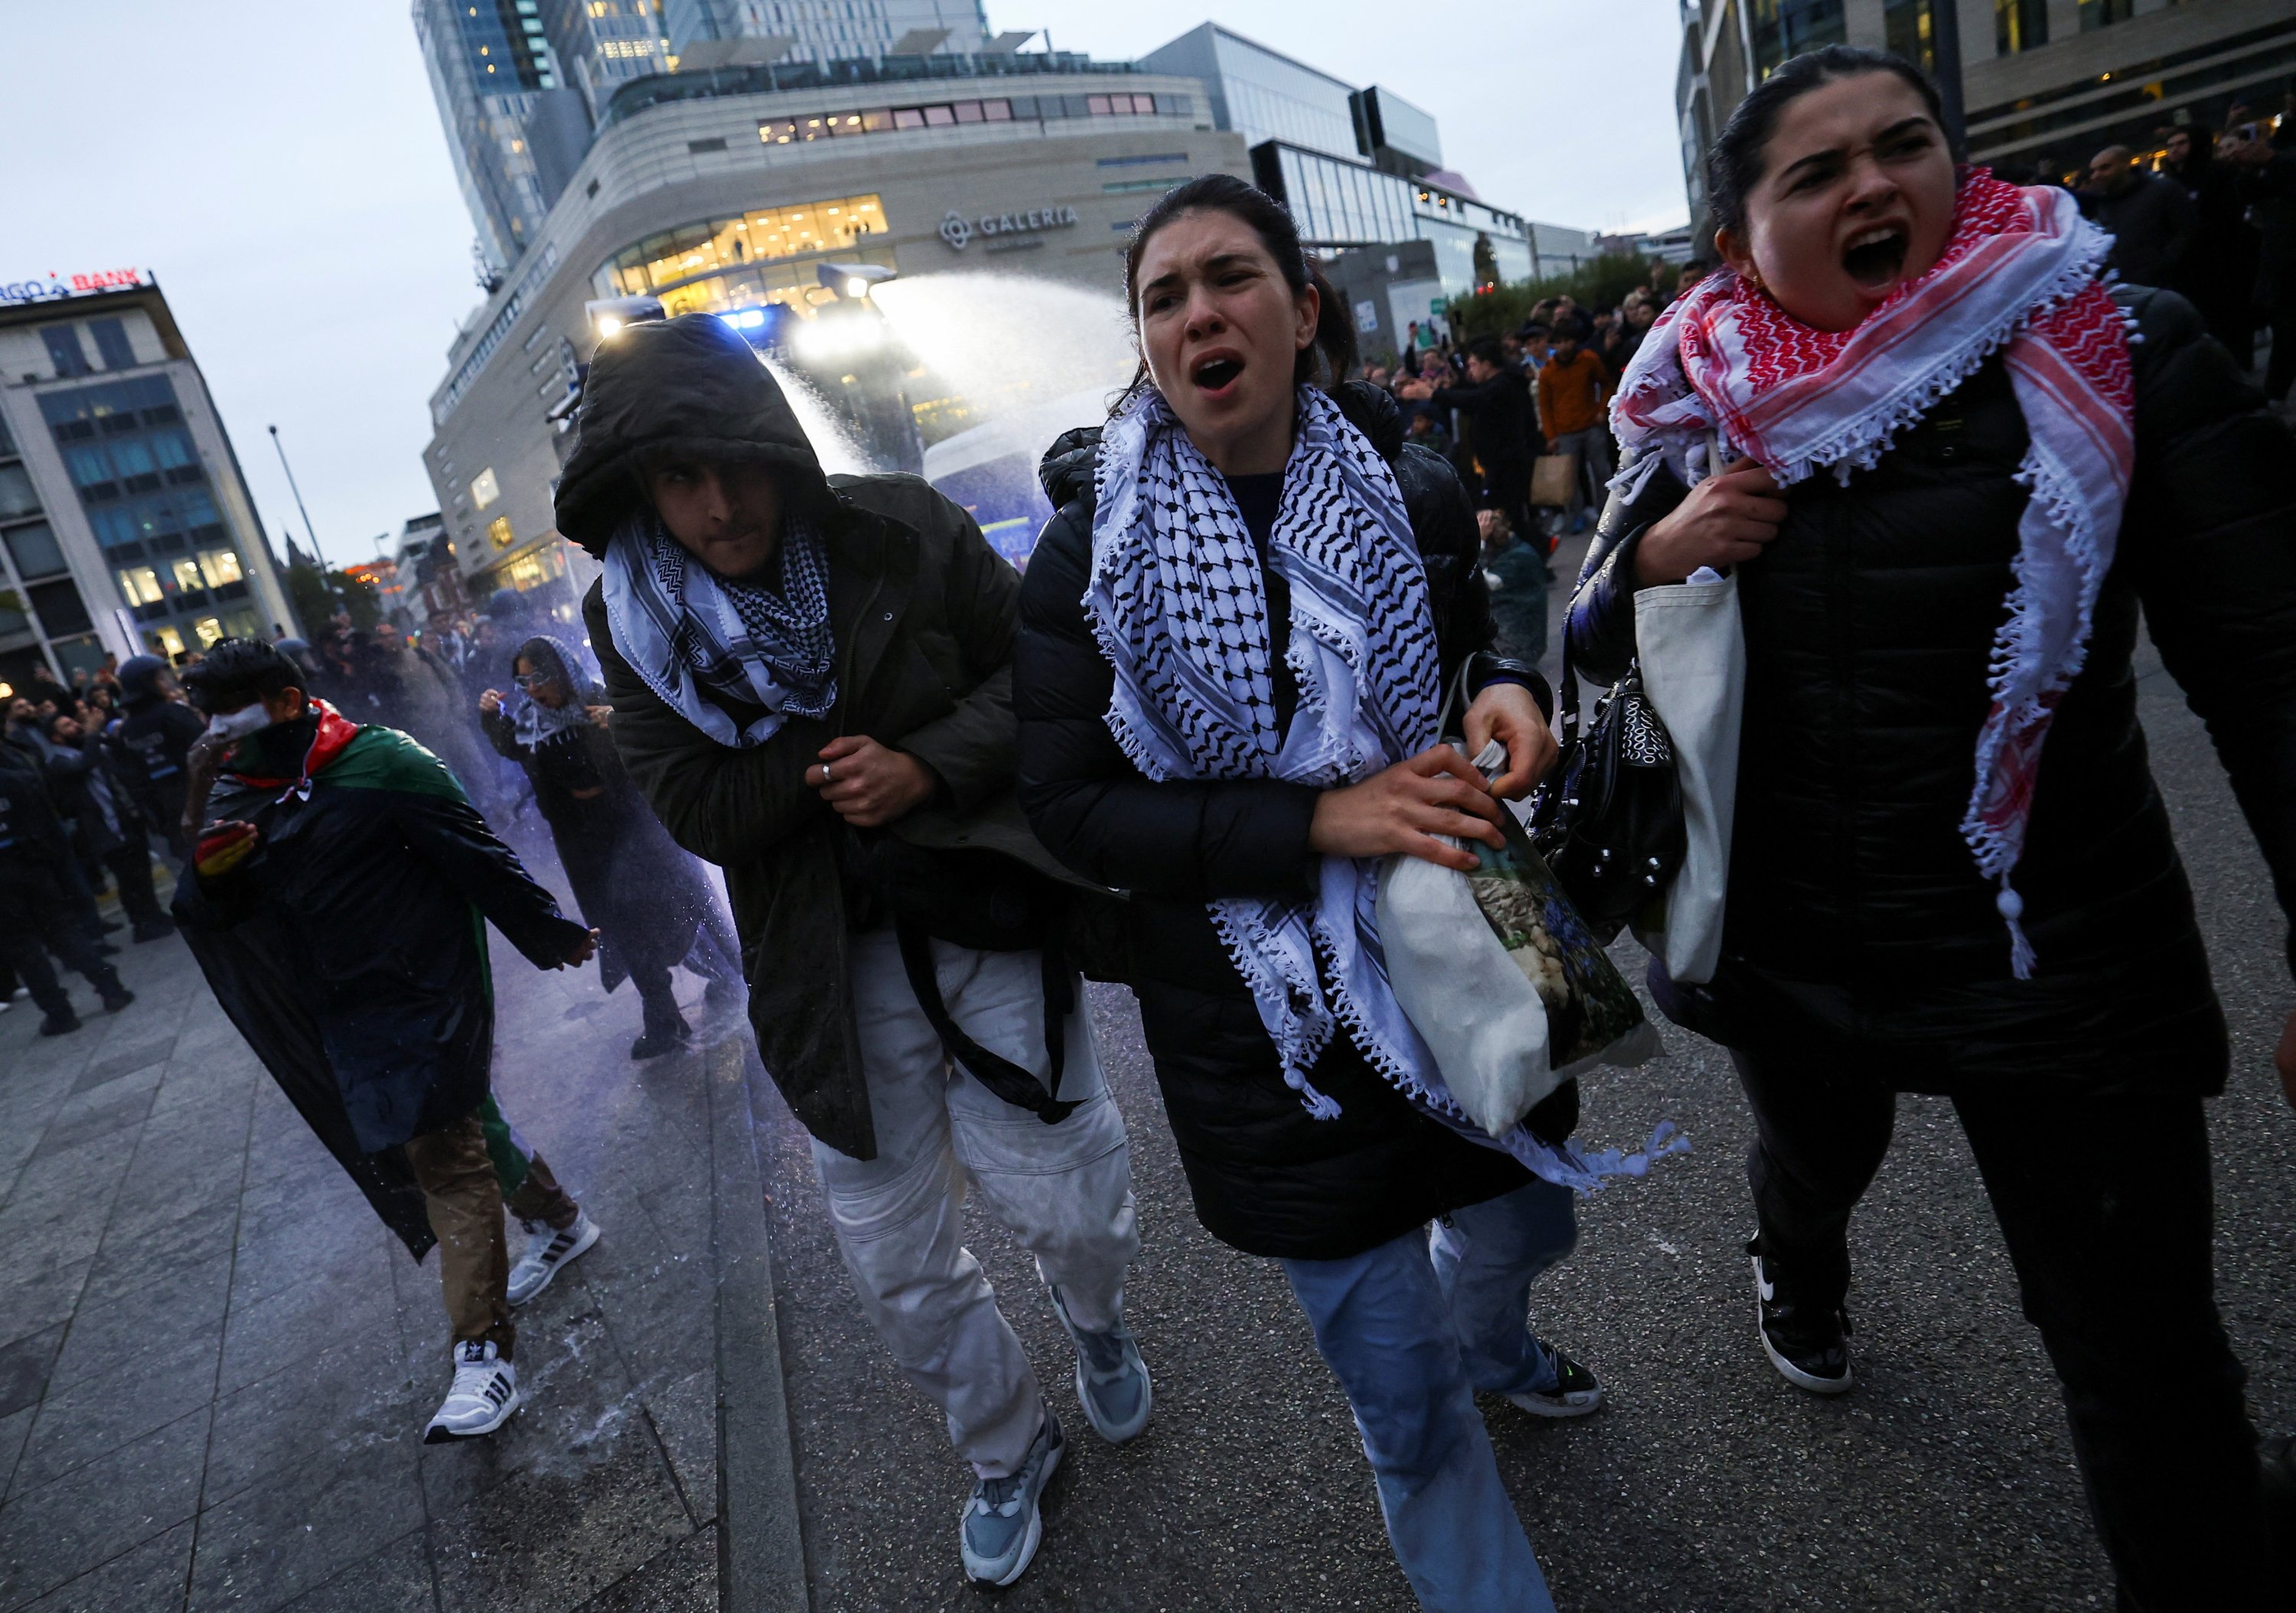 Germany, France, US detain pro-Palestine protestors | Daily Sabah